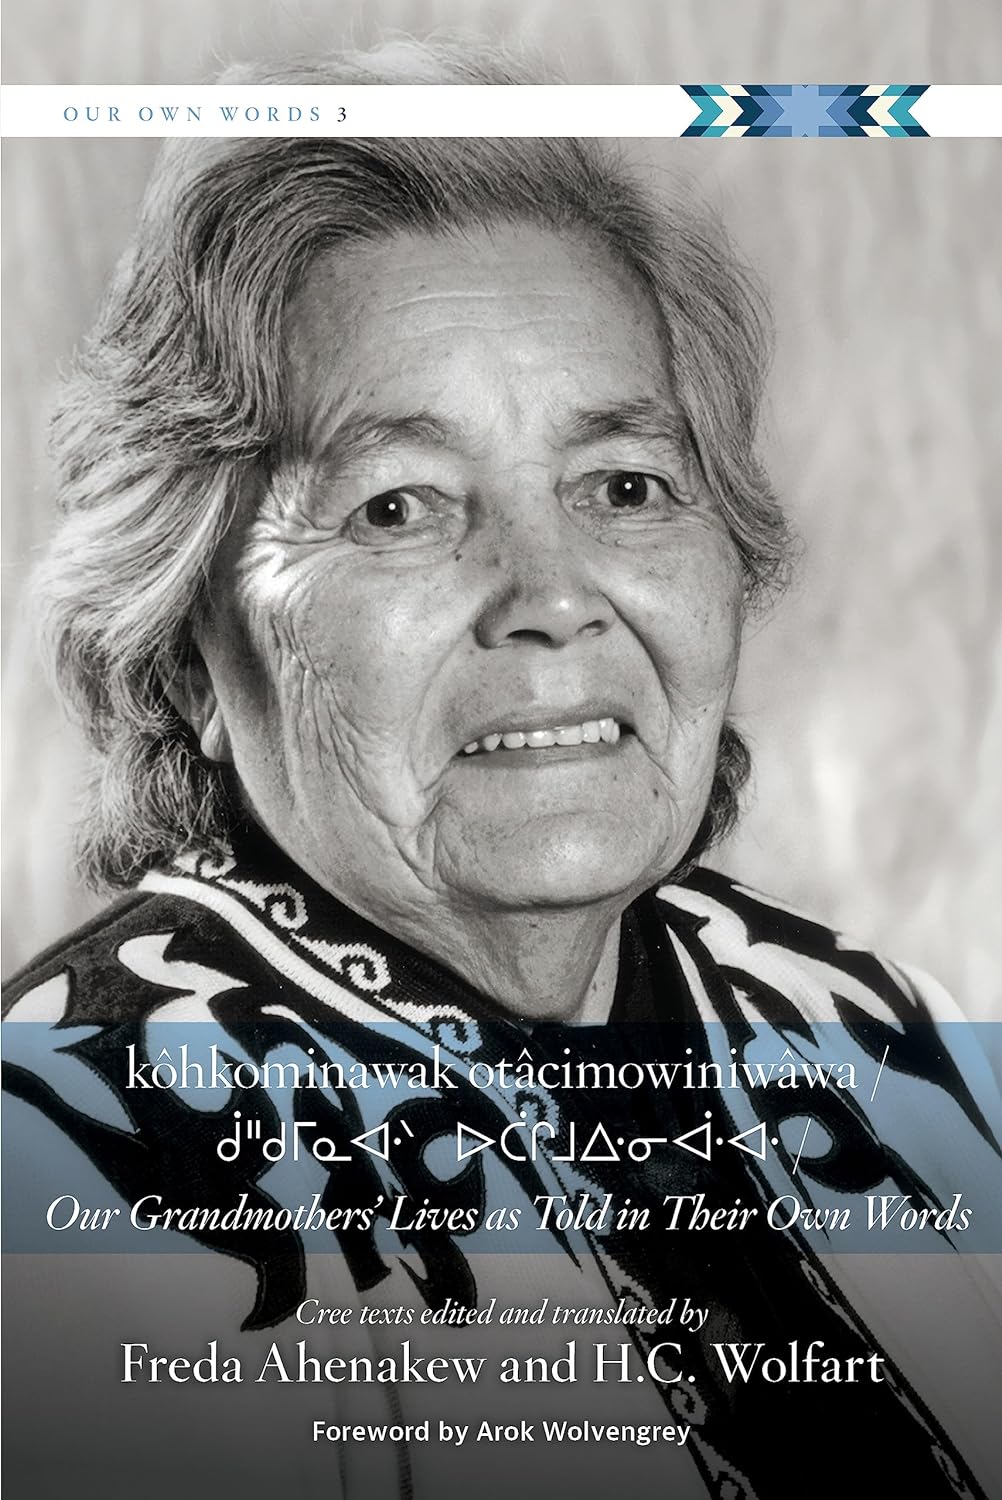 kôkominawak otâcimowiniwâwa / Our Grandmothers’ Lives as Told in Their Own Words edited by Freda Ahenakew & H.C. Wolfart